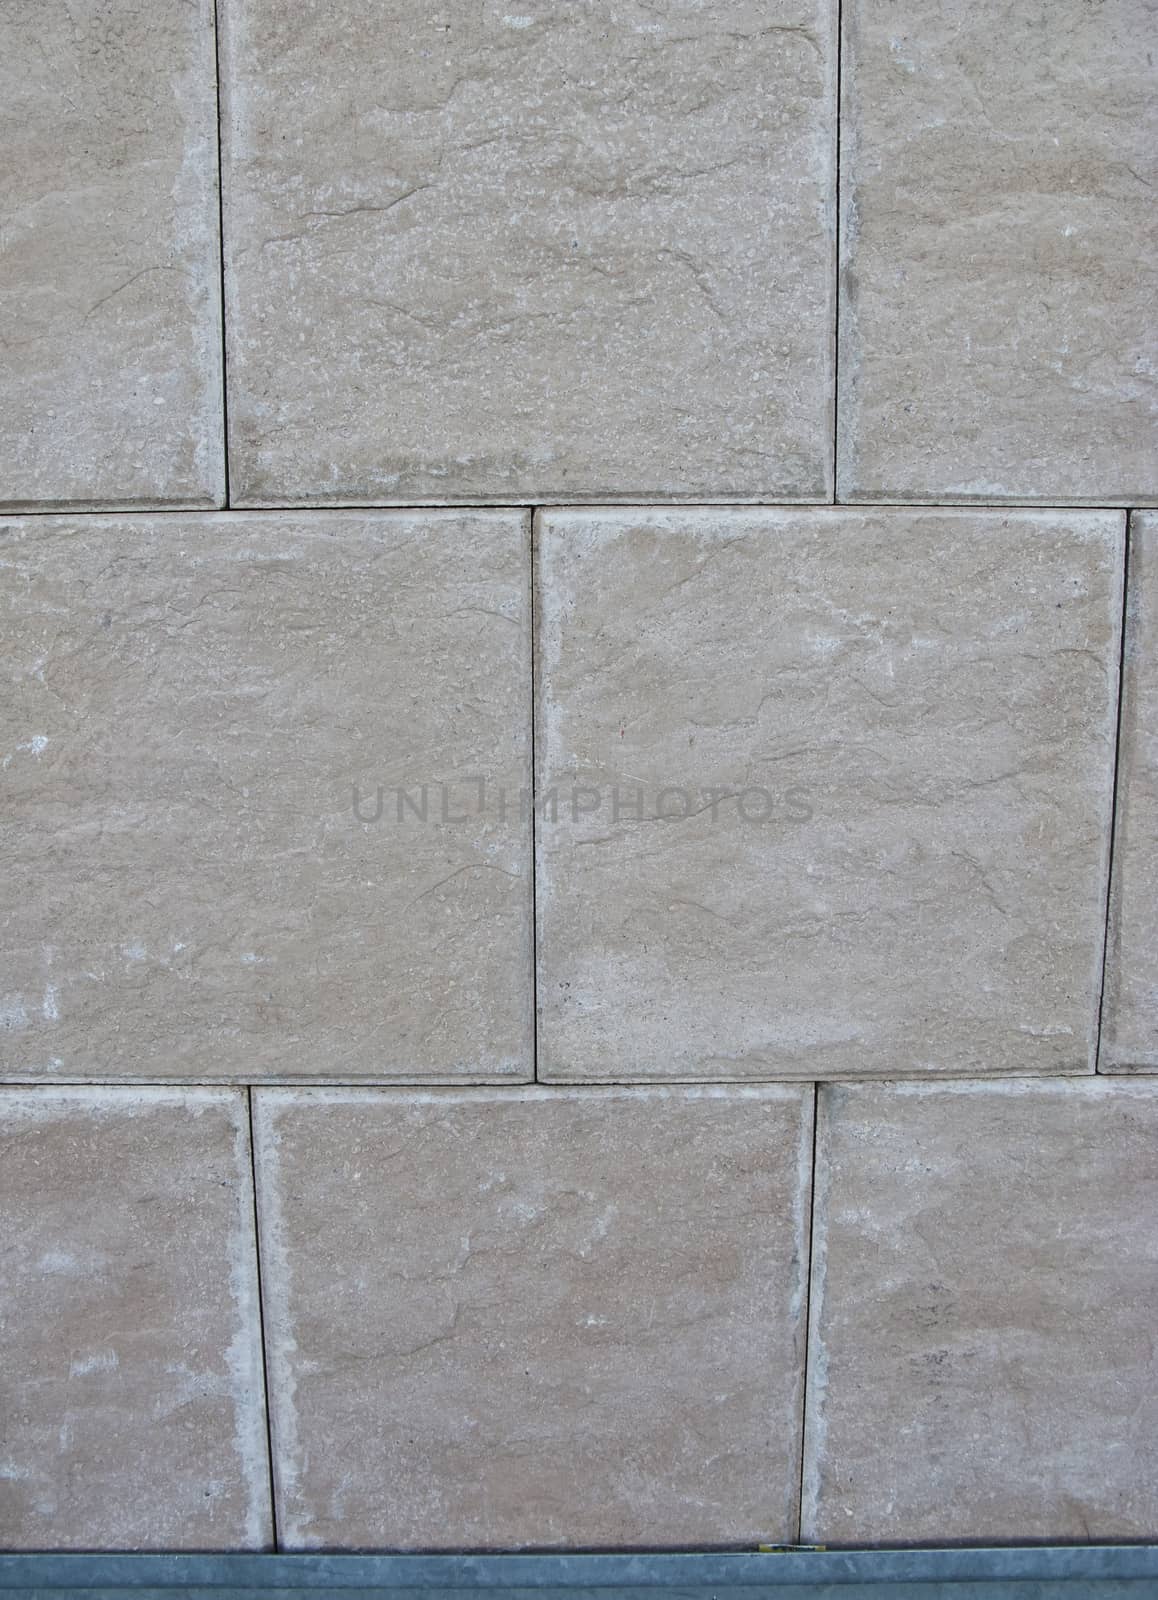 Wall texture, diverse bricks styles by FernandoCortes